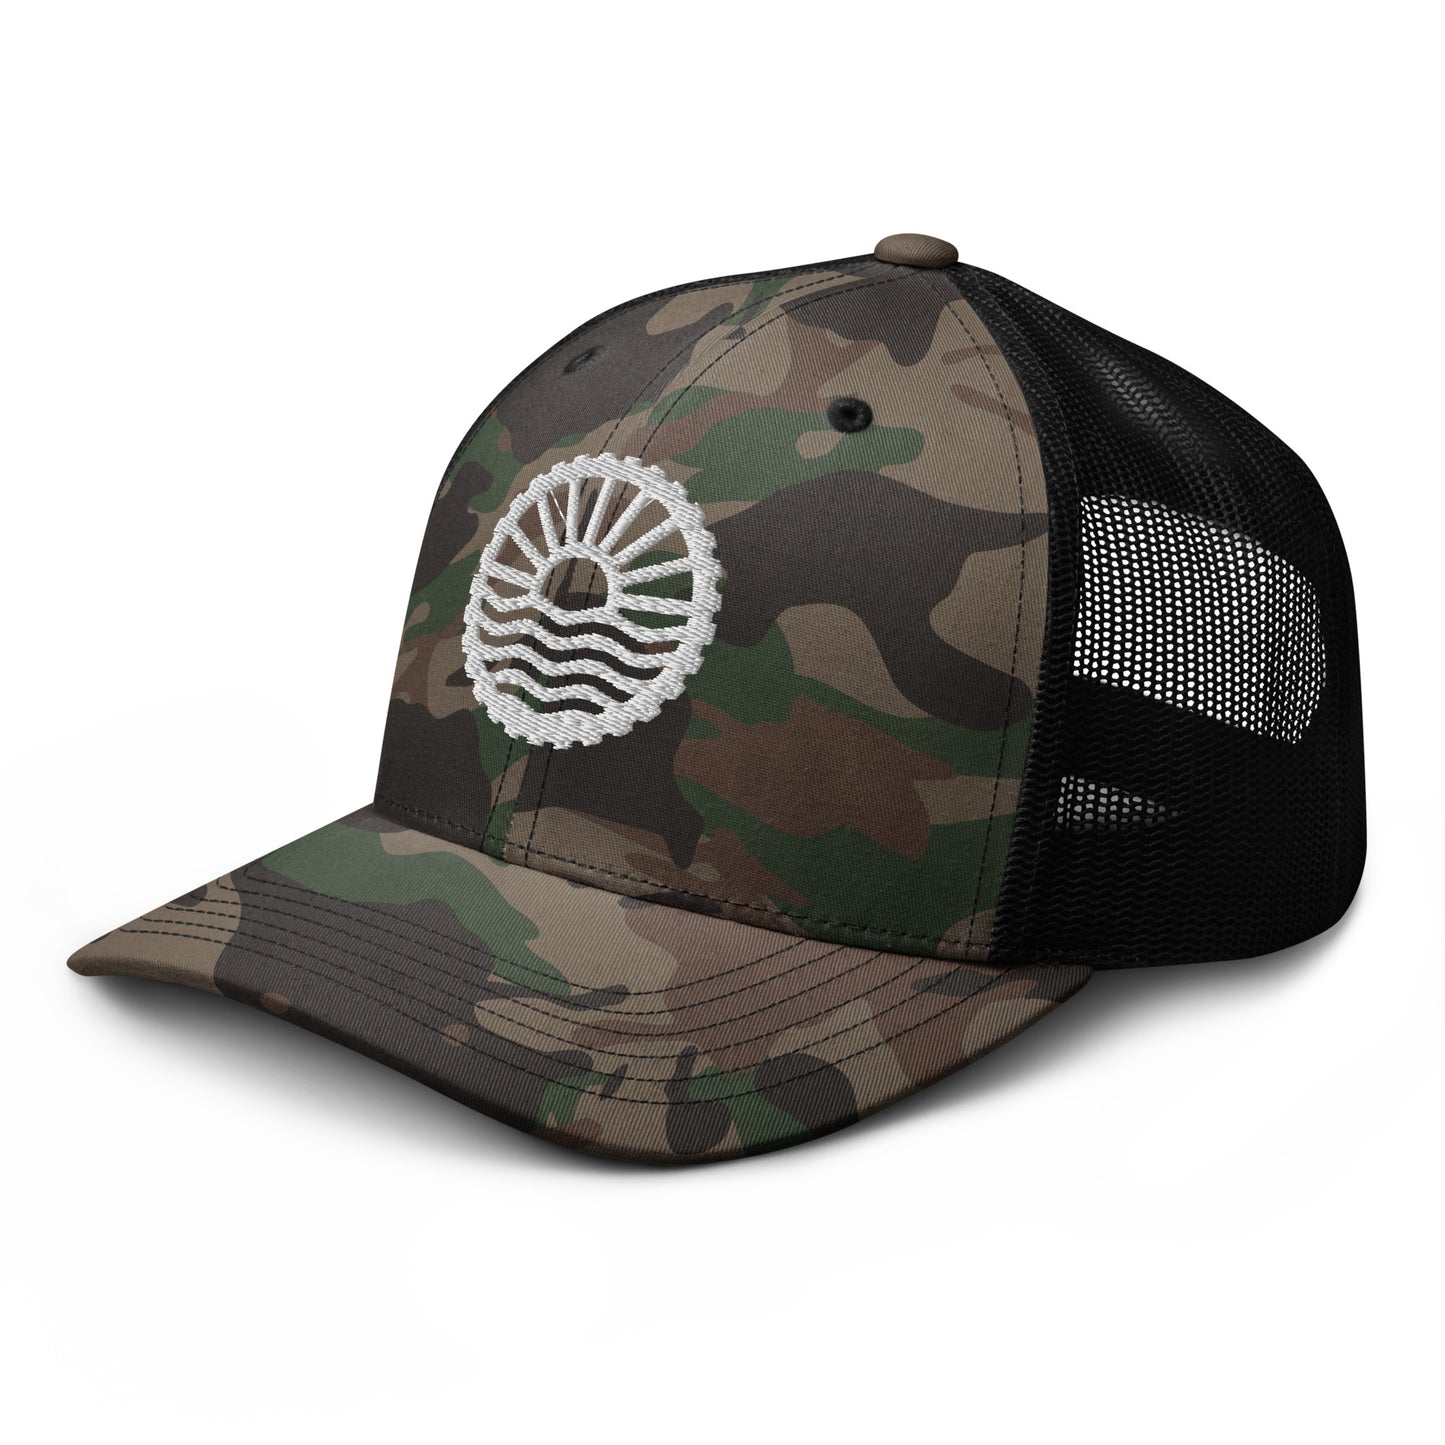 Wheel - Camouflage Snapback mesh hat